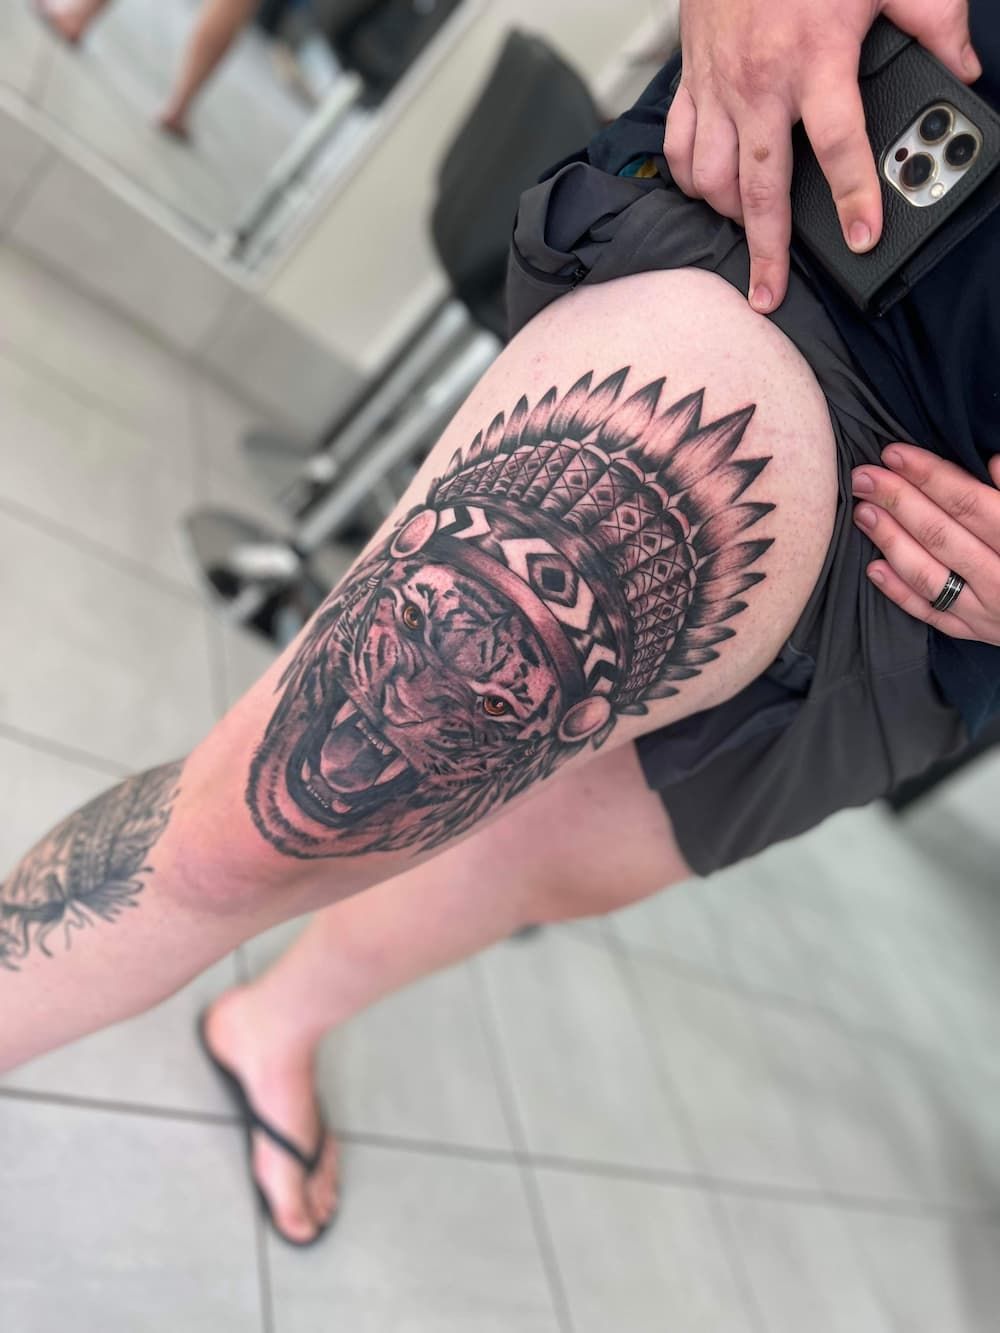 a person has a tattoo of a tiger on their leg - Tattoo Studio in Kawana, QLD